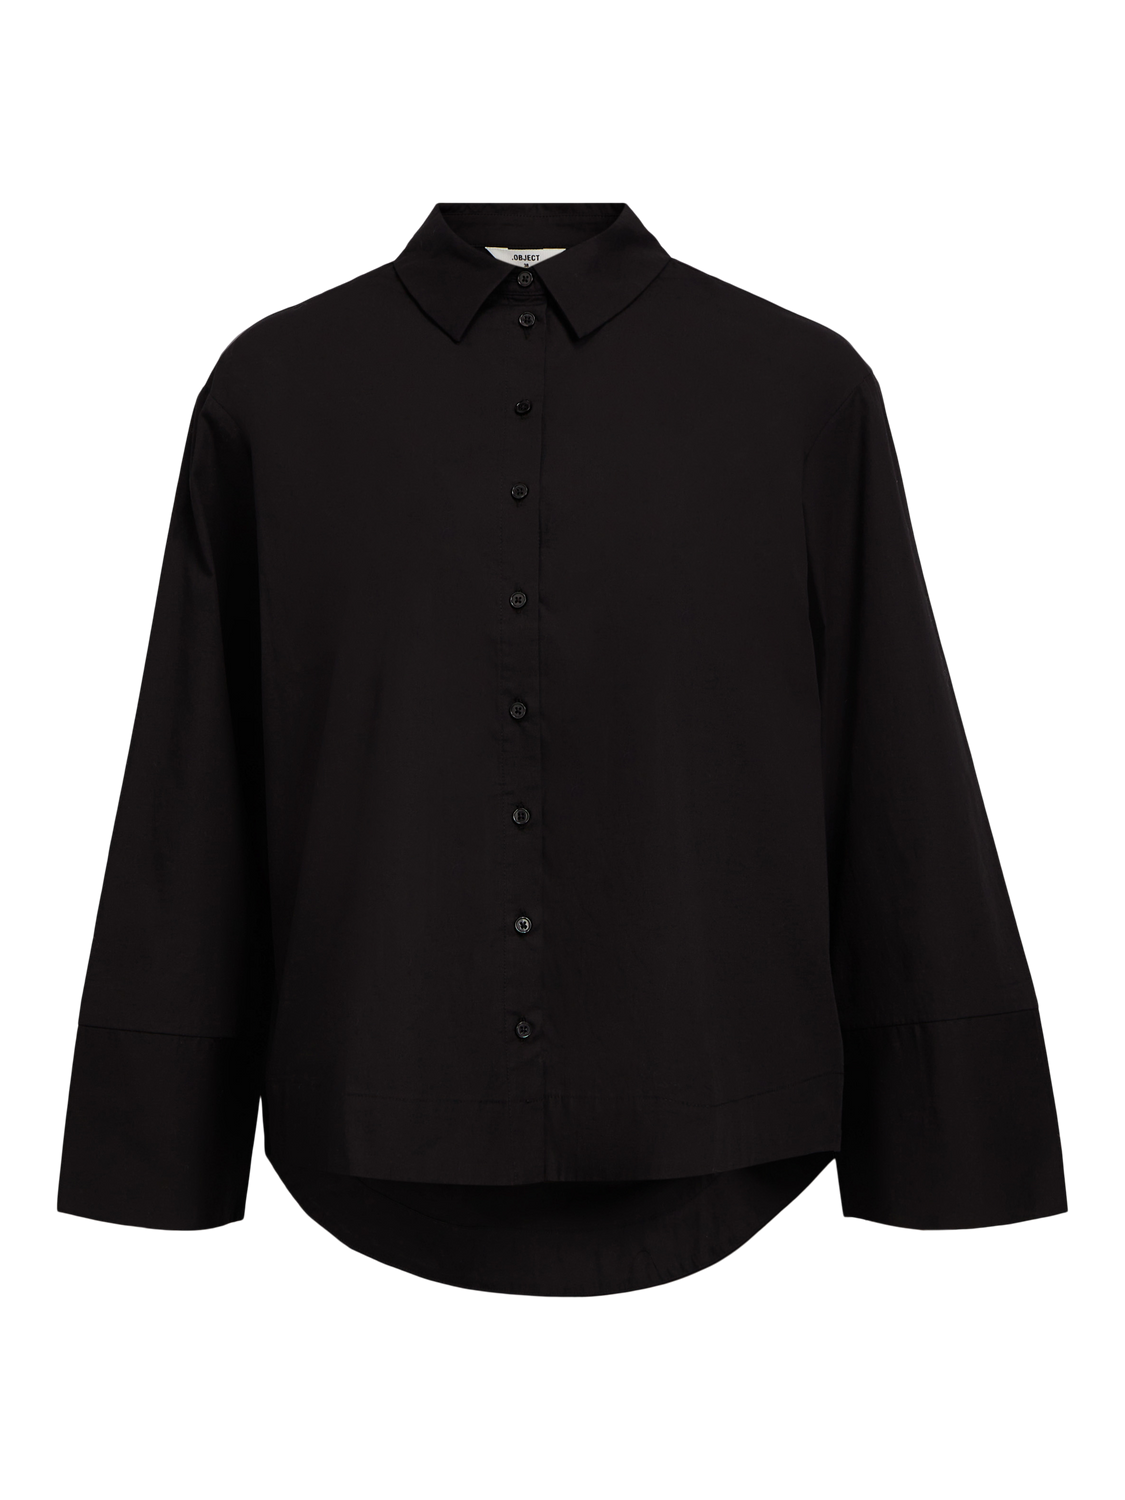 OBJKIRA Shirts - Black